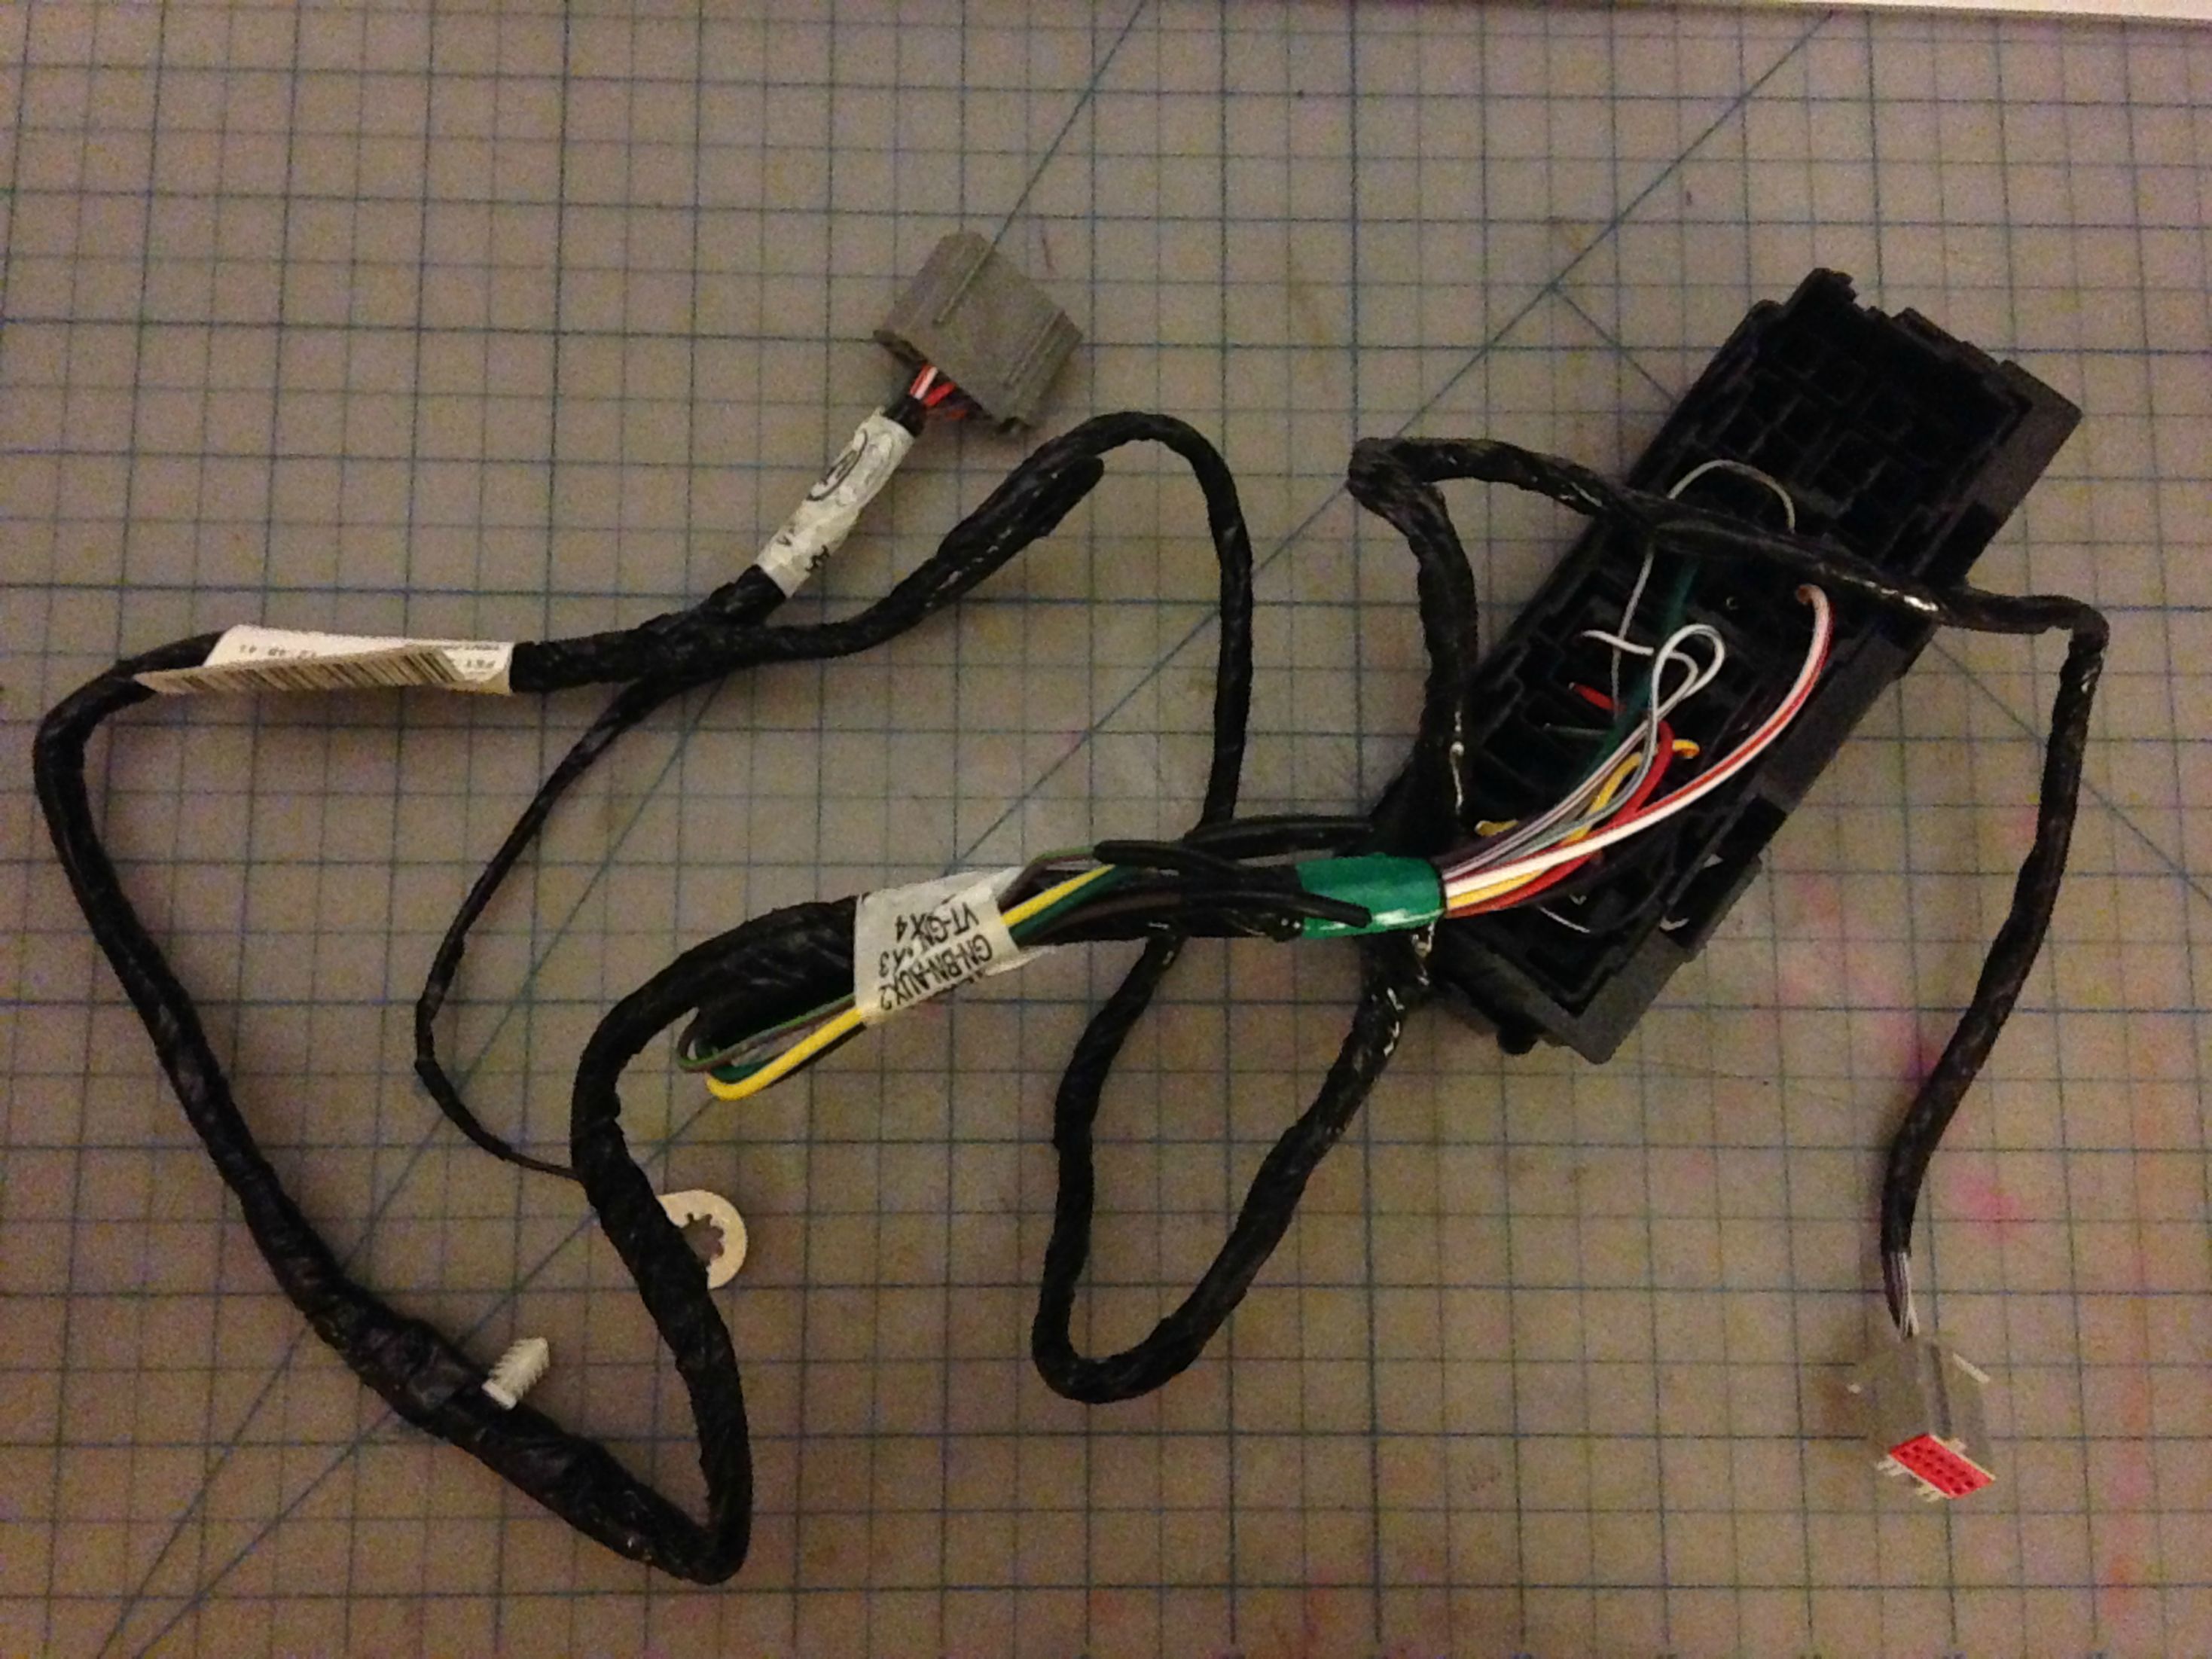 2014 f350 upfitter switch wiring diagram